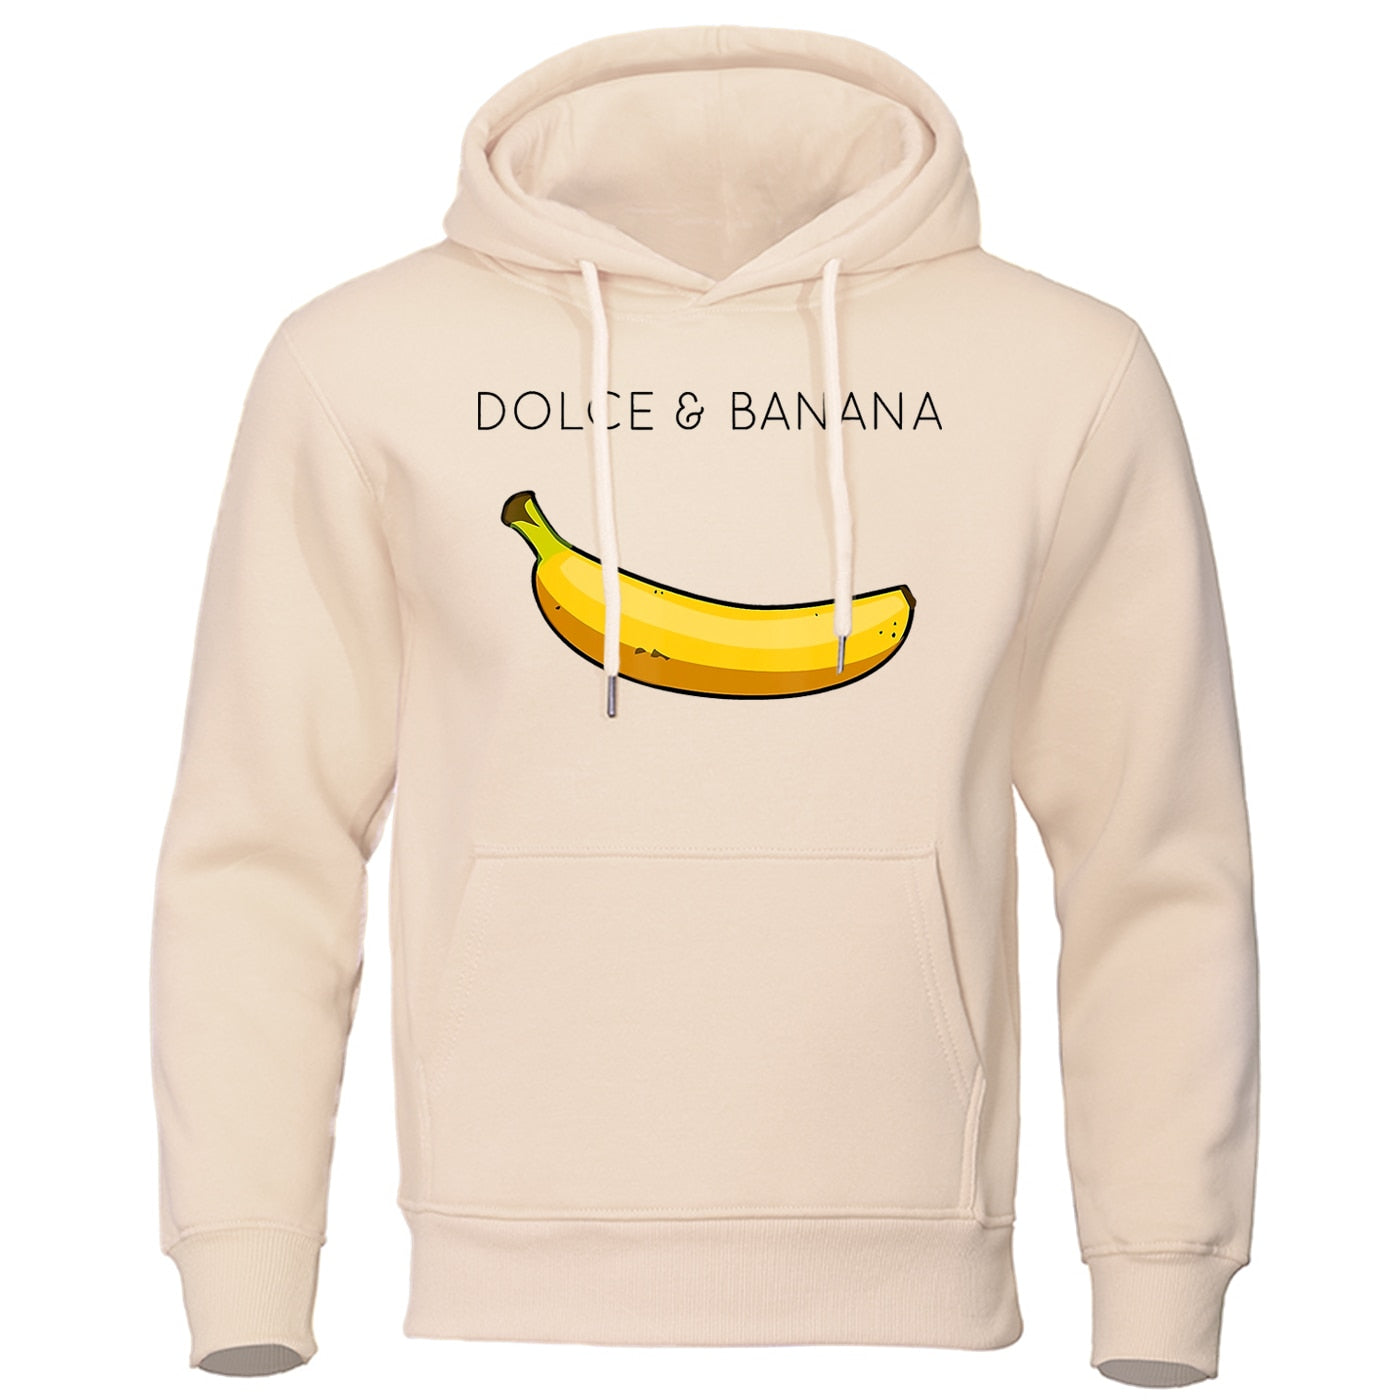 Dolce & Banana Hoodie Kapuzenpullover